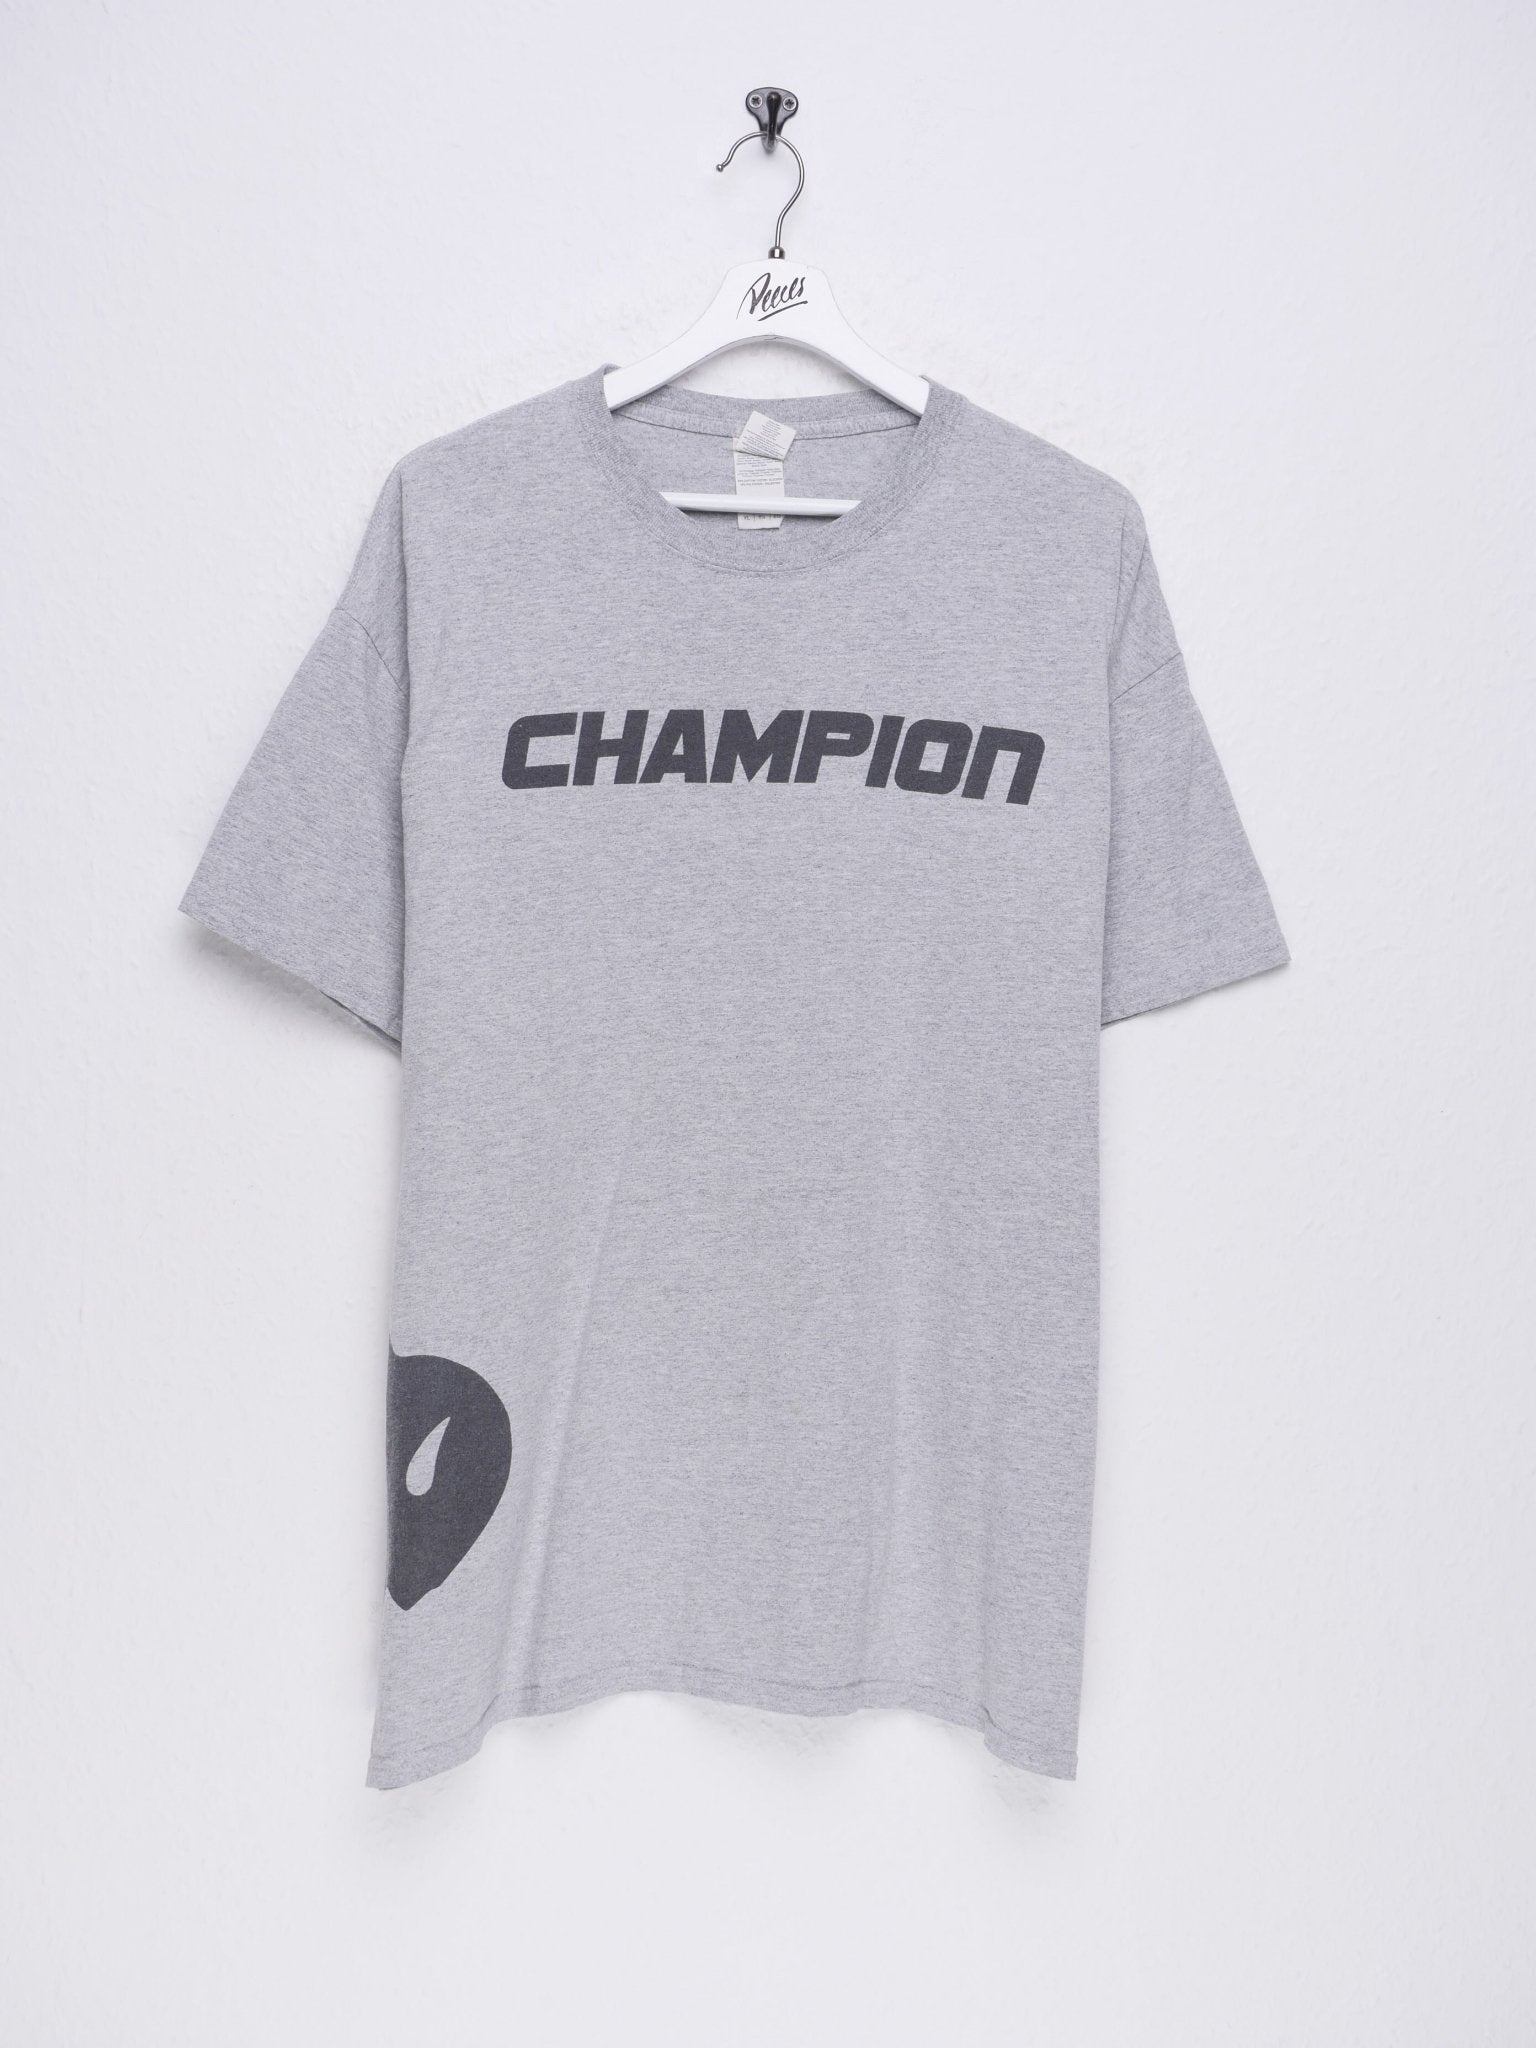 printed Champion grey Shirt - Peeces